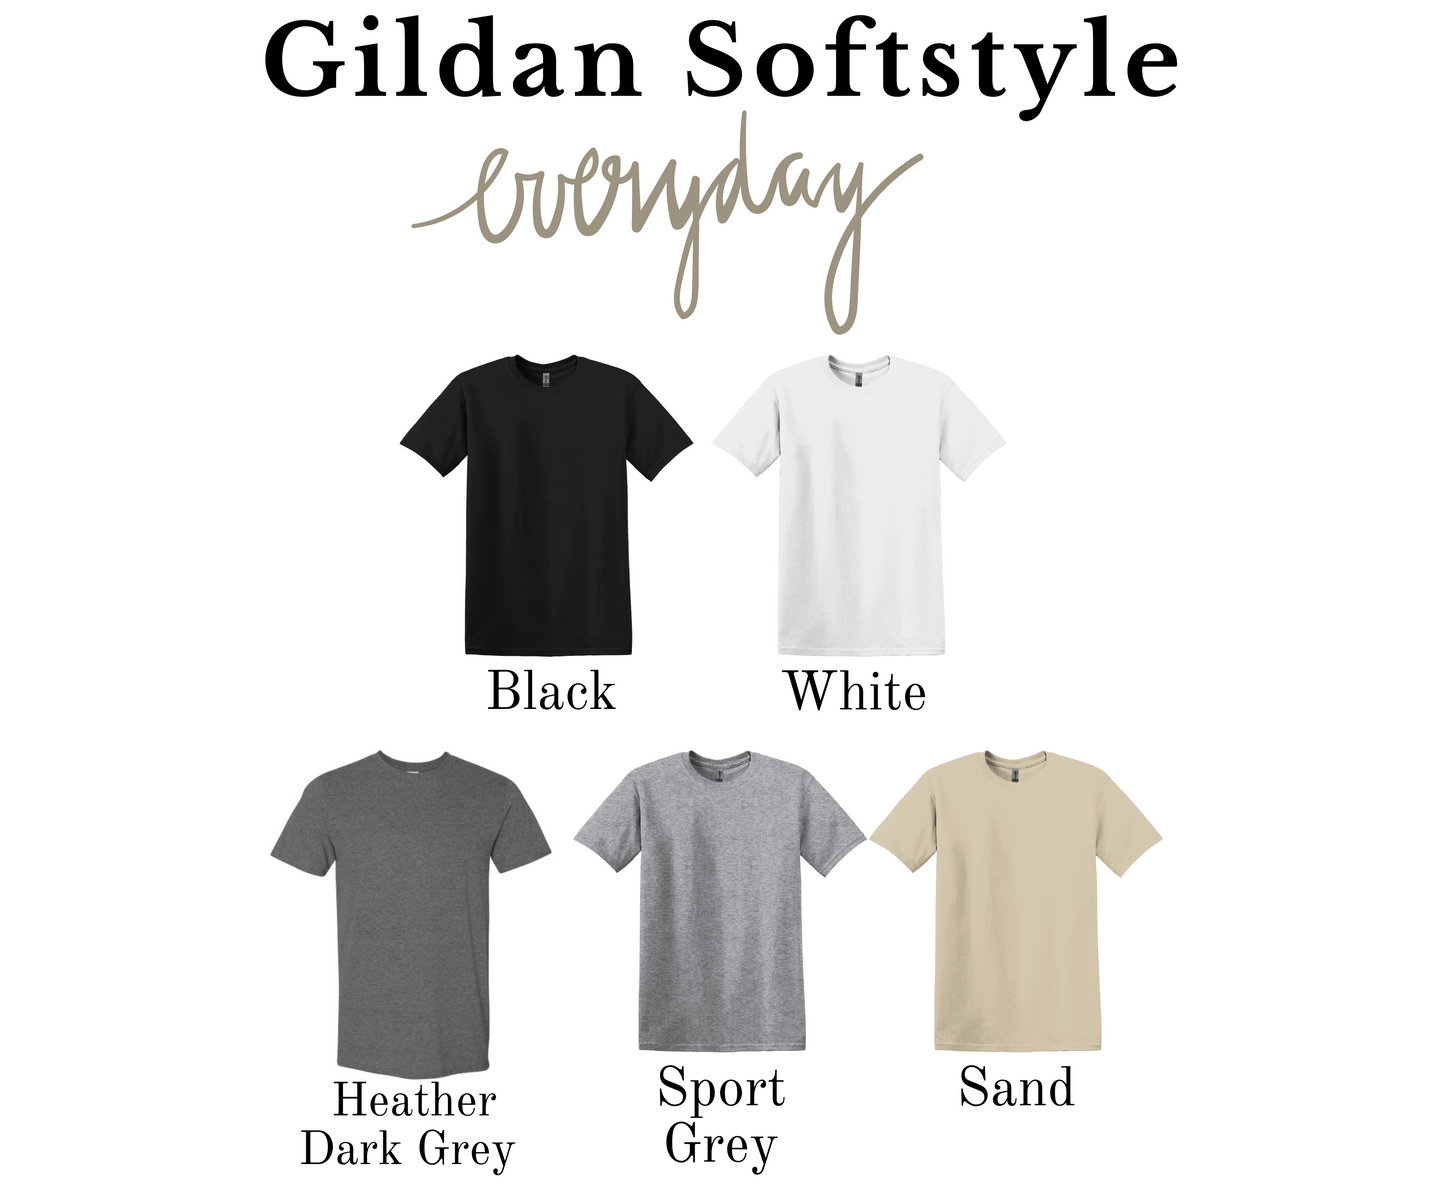 Sequin Effect Grinch Face Gildan Softstyle T-shirt or Sweatshirt